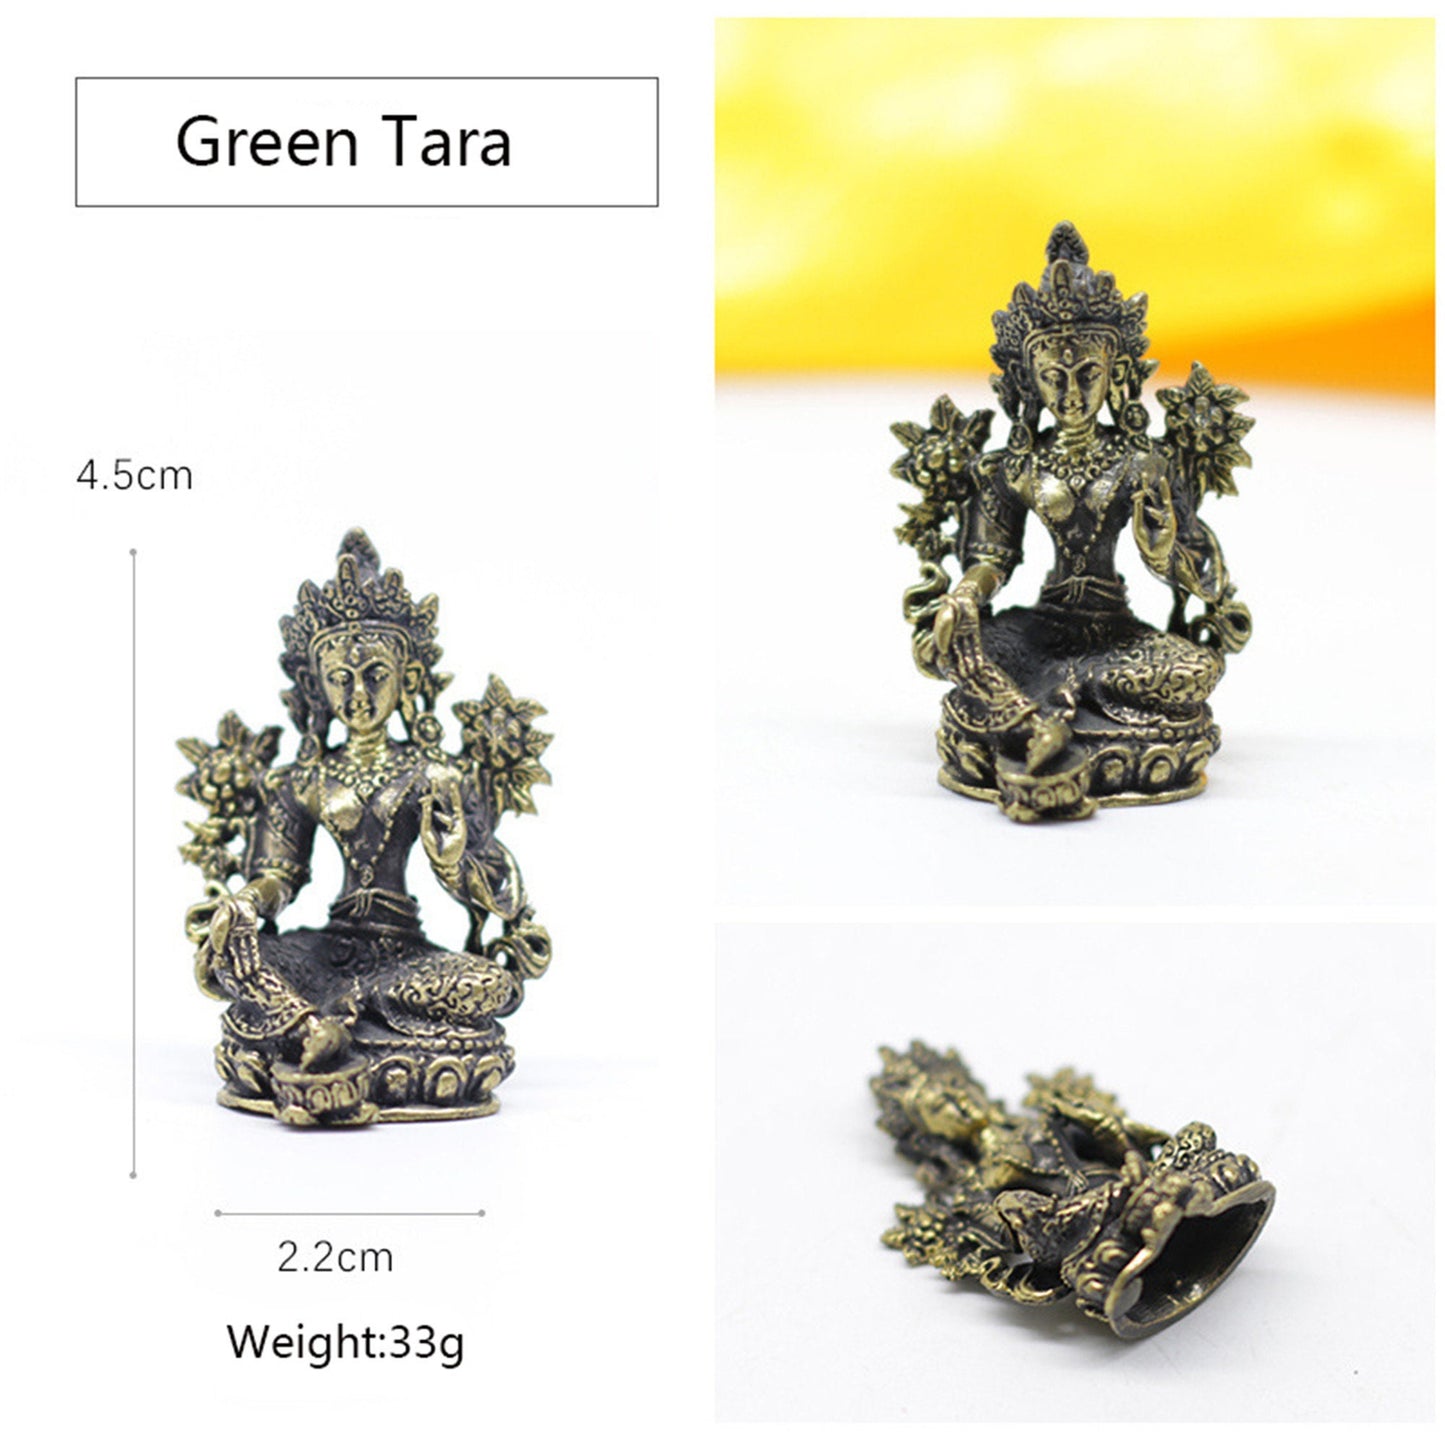 Green Tara, Padmapani's Tears